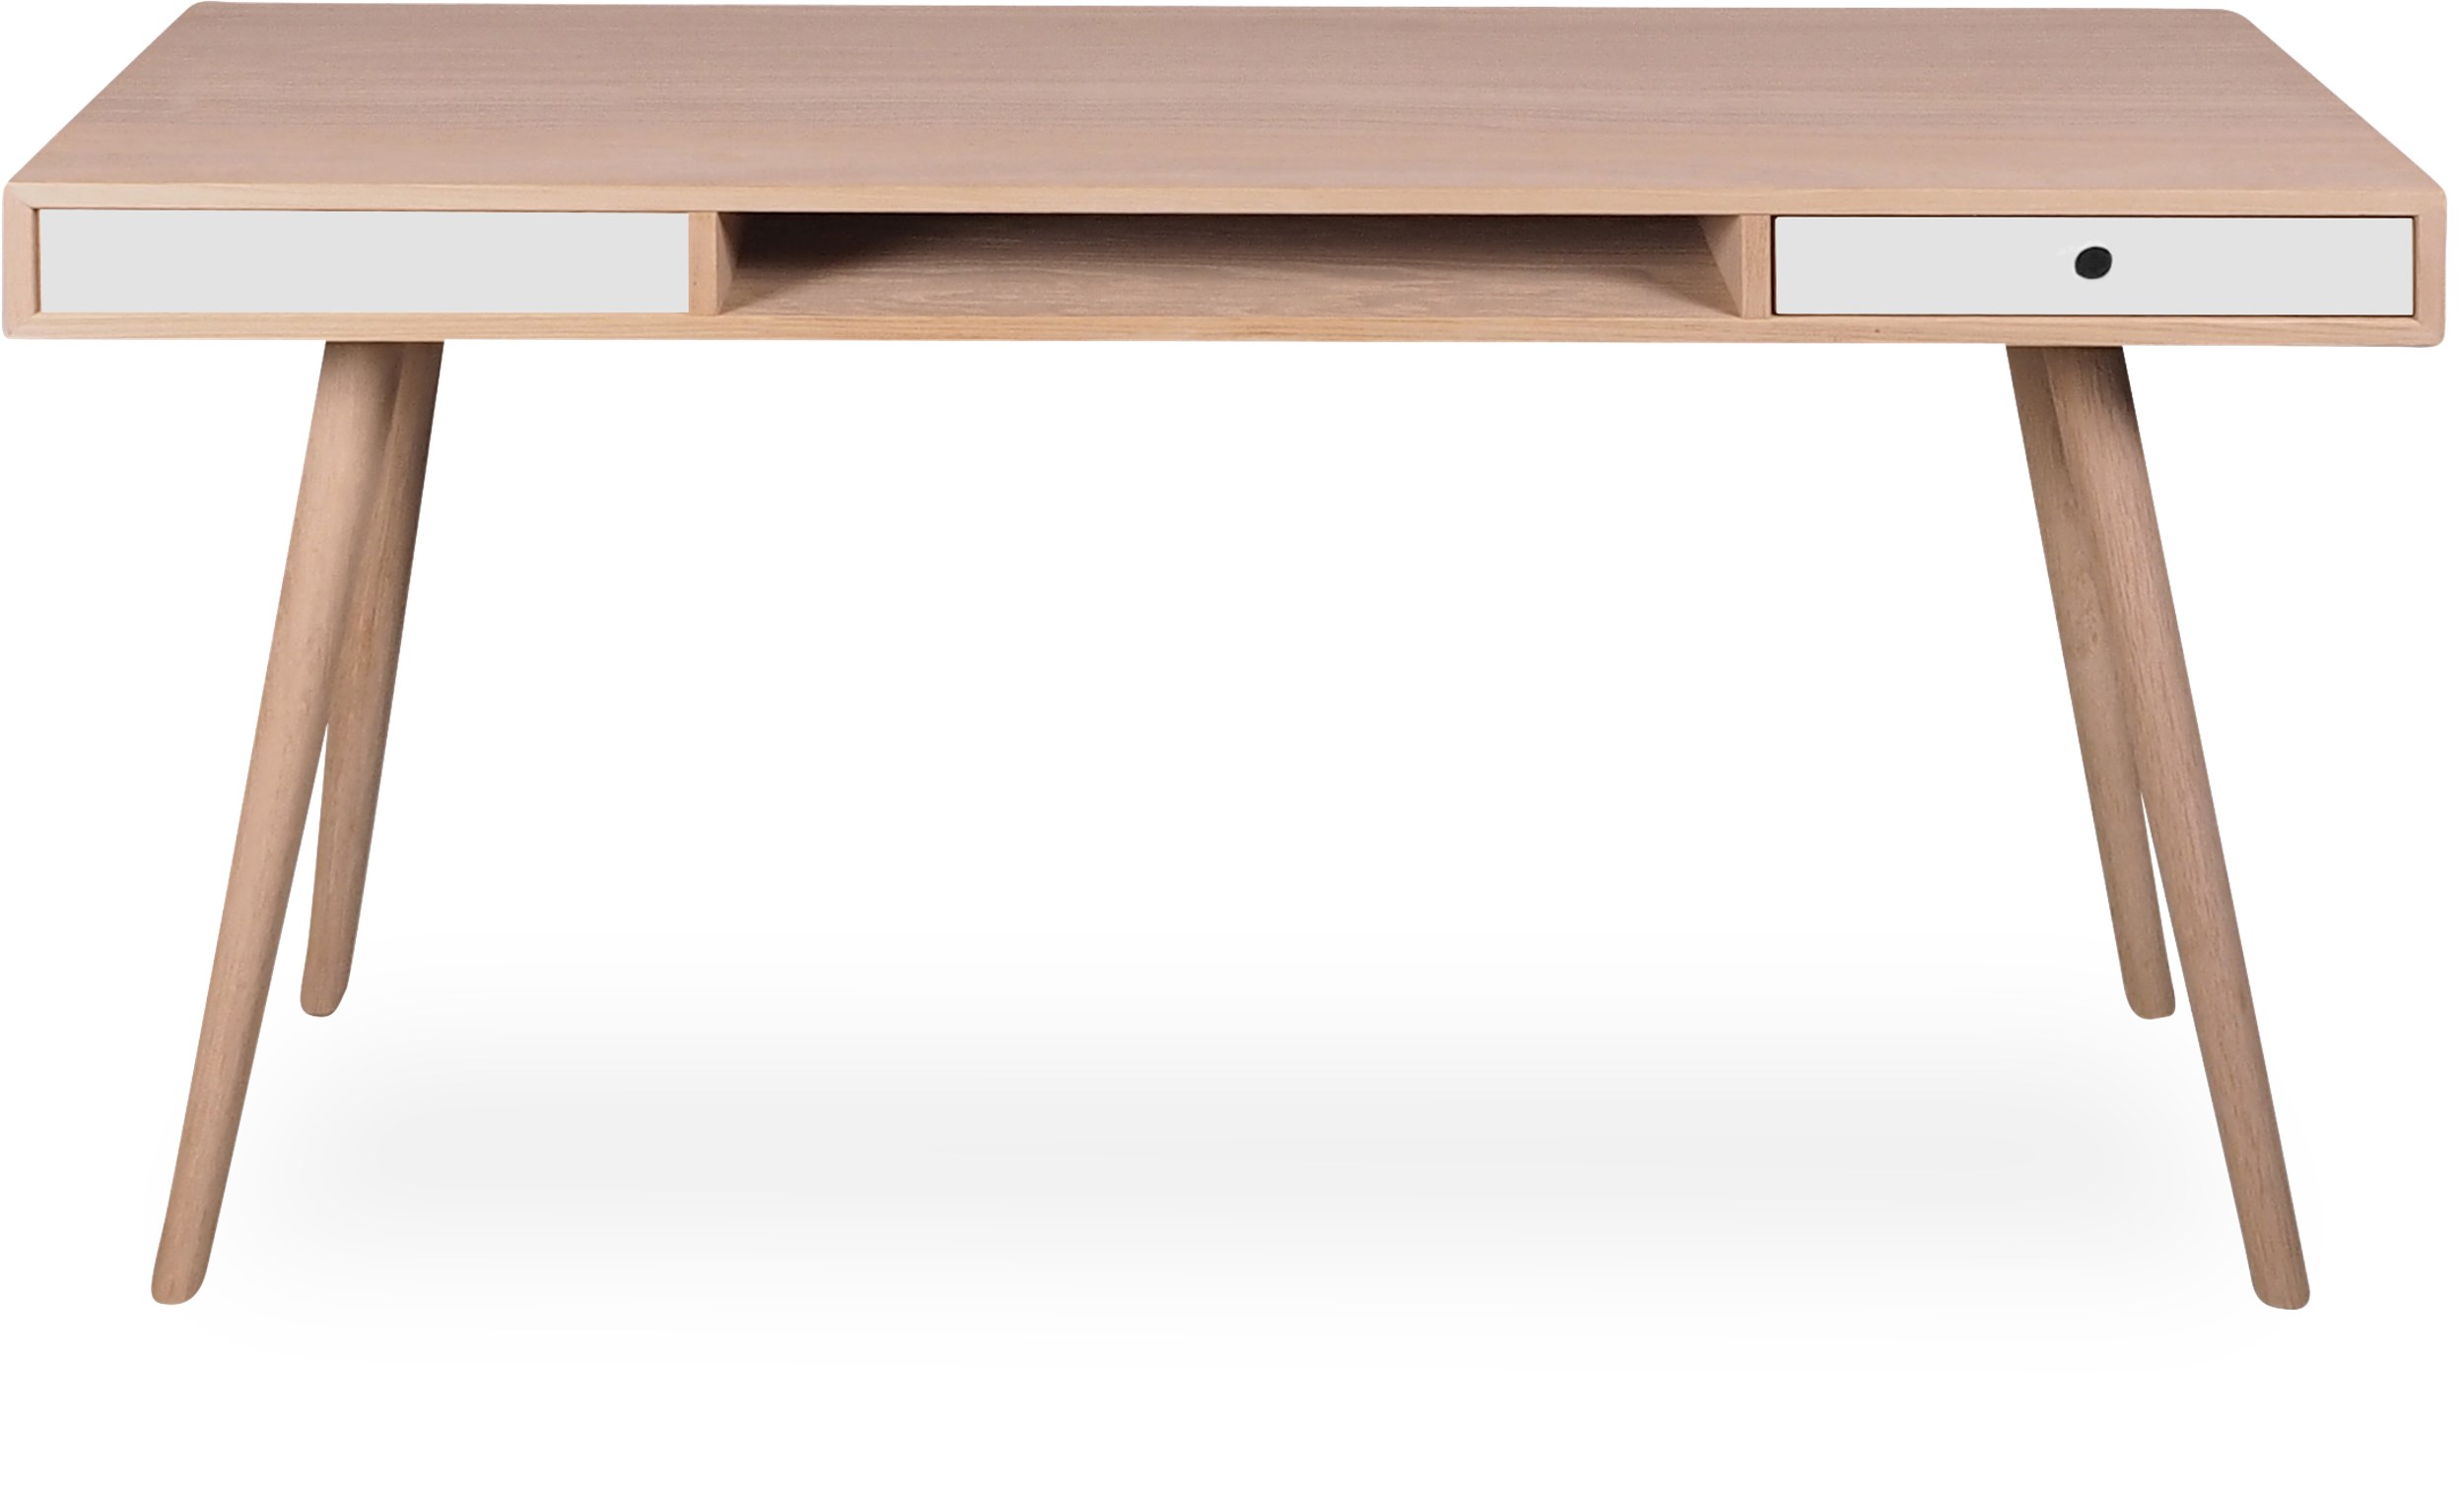 Secret Skrivbord - Topp i vitpigmenterad ekfanér, ben i massiv vitpigm. lack. ek och front i vit laminat